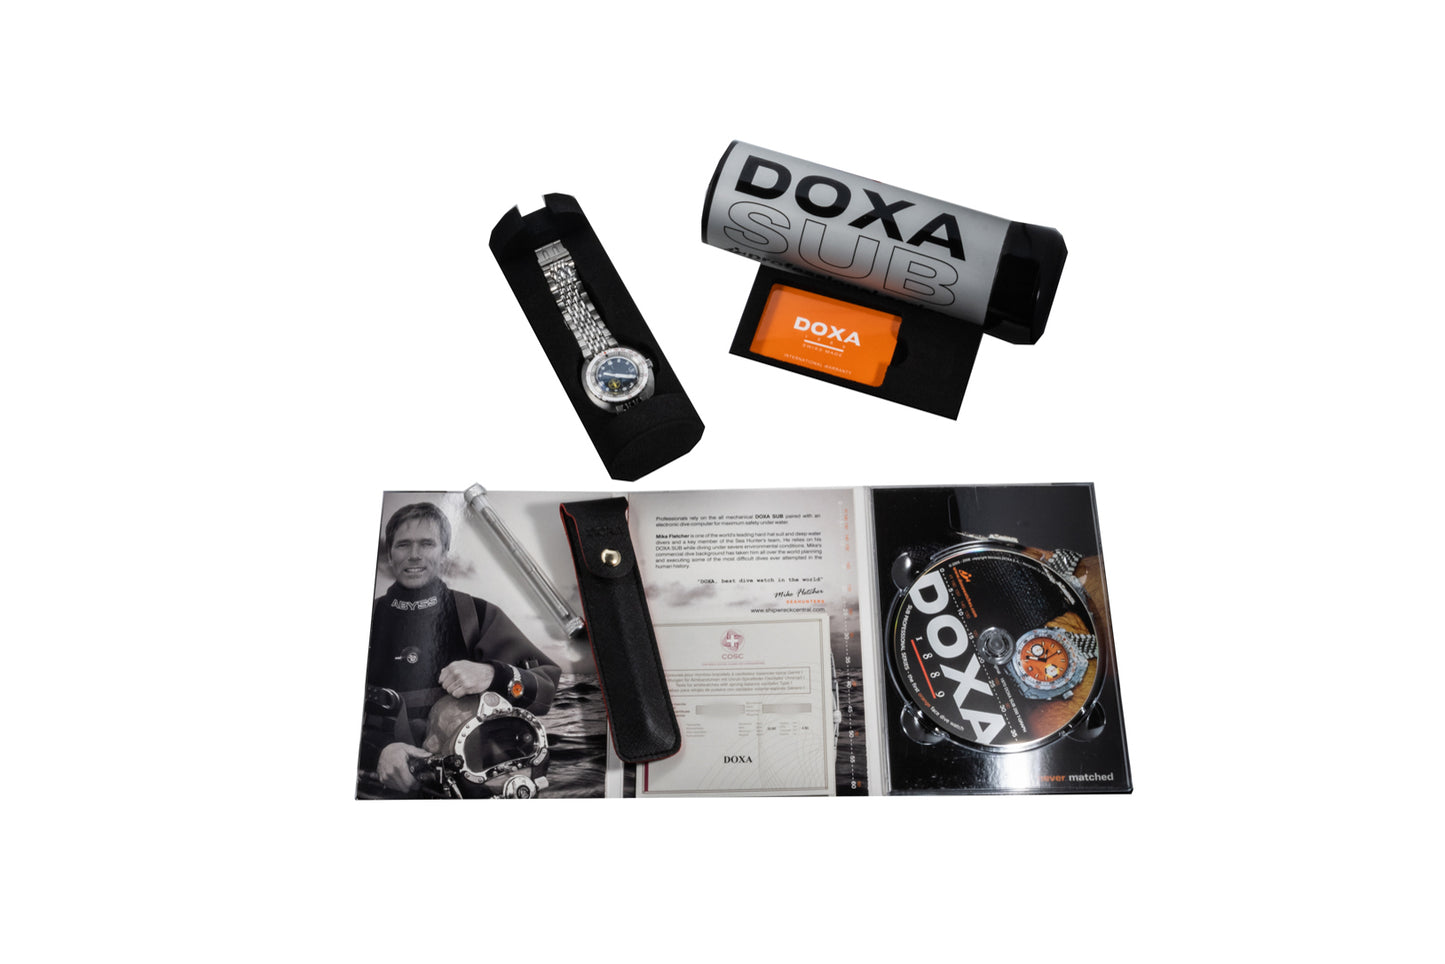 DOXA Sub 300 Sharkhunter 'Blacklung' Limited Edition